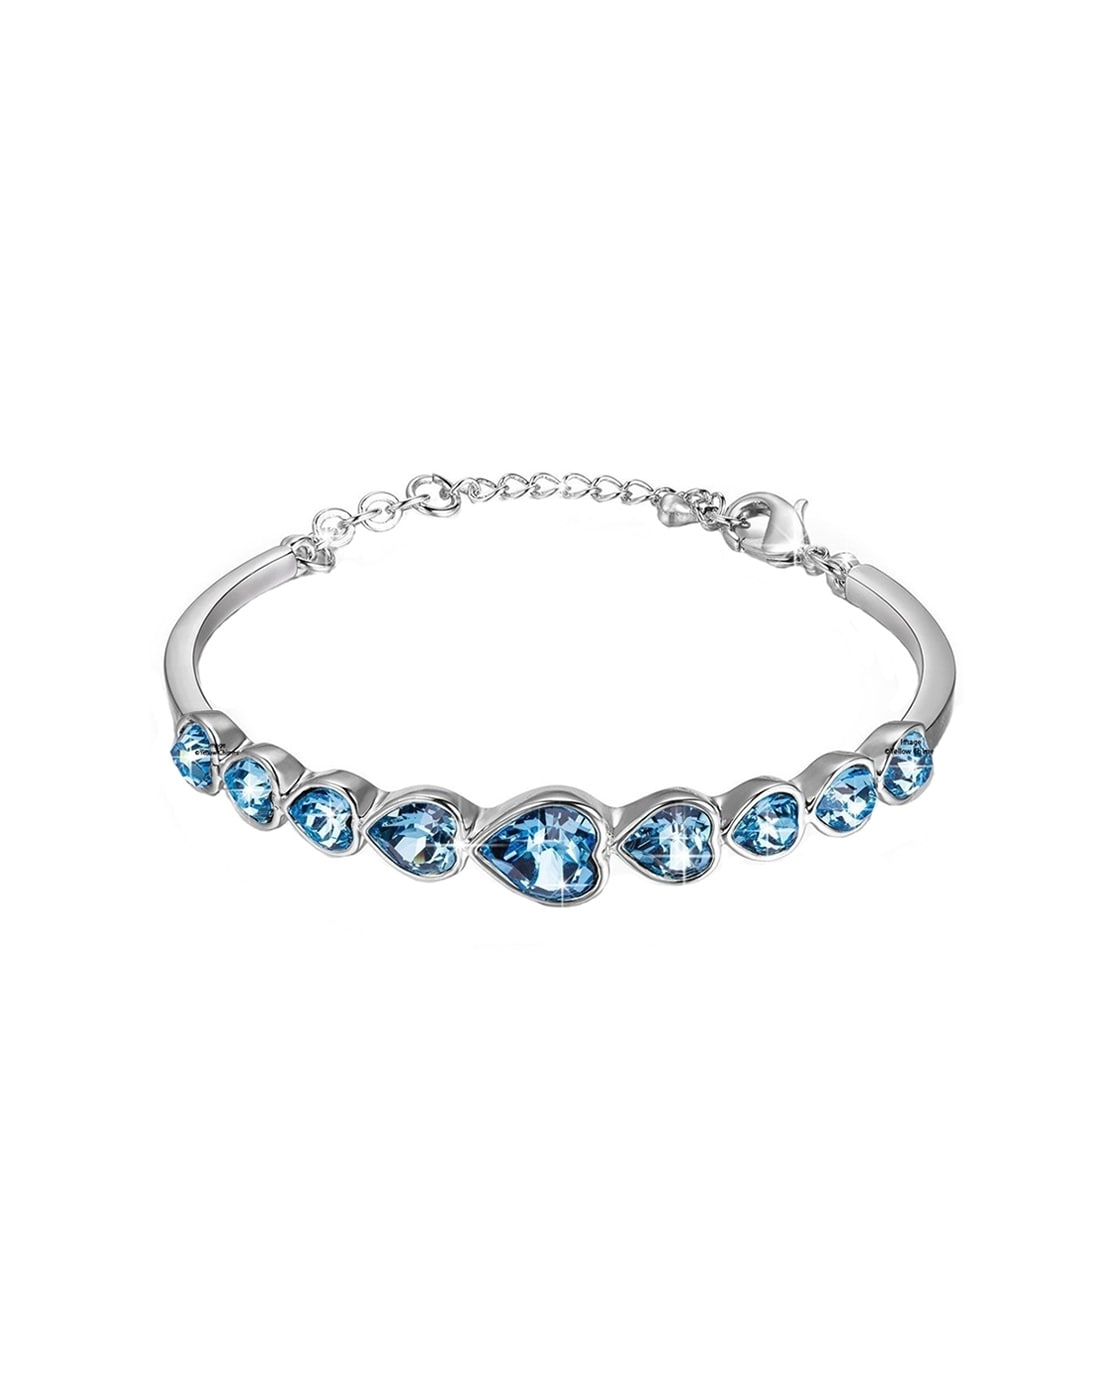 Buy Pearl  Swarovski Crystal Stylish Charm Bracelet for WomenGirlLadies  HeartLove Dangling Fashion Jewellery at Amazonin